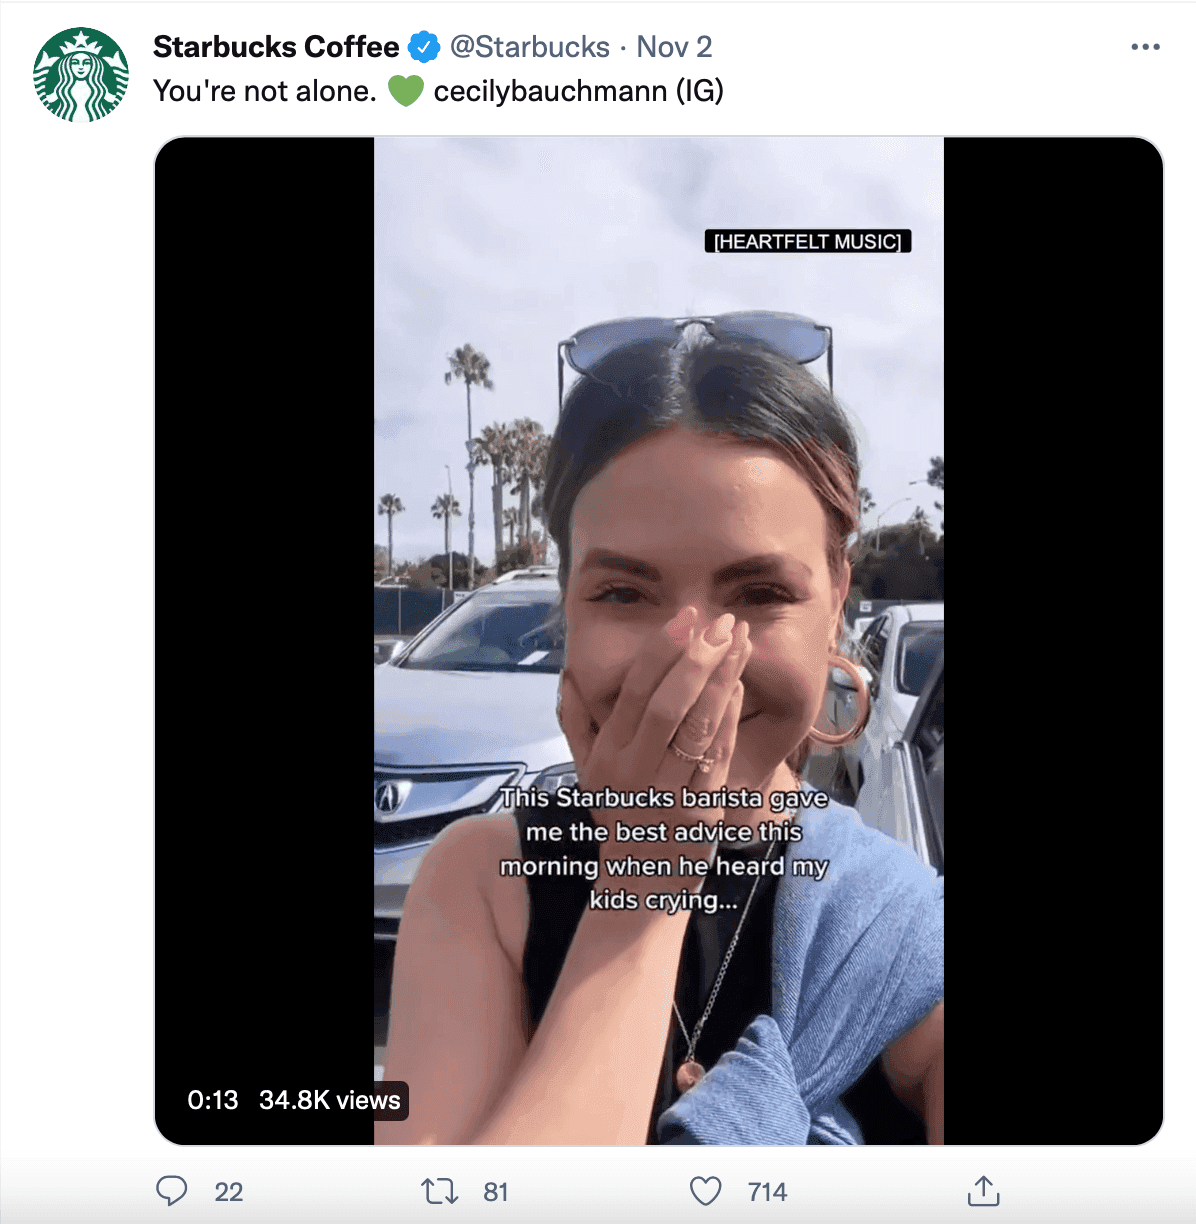 Starbucks tweet sharing a story of a barista giving a customer advice